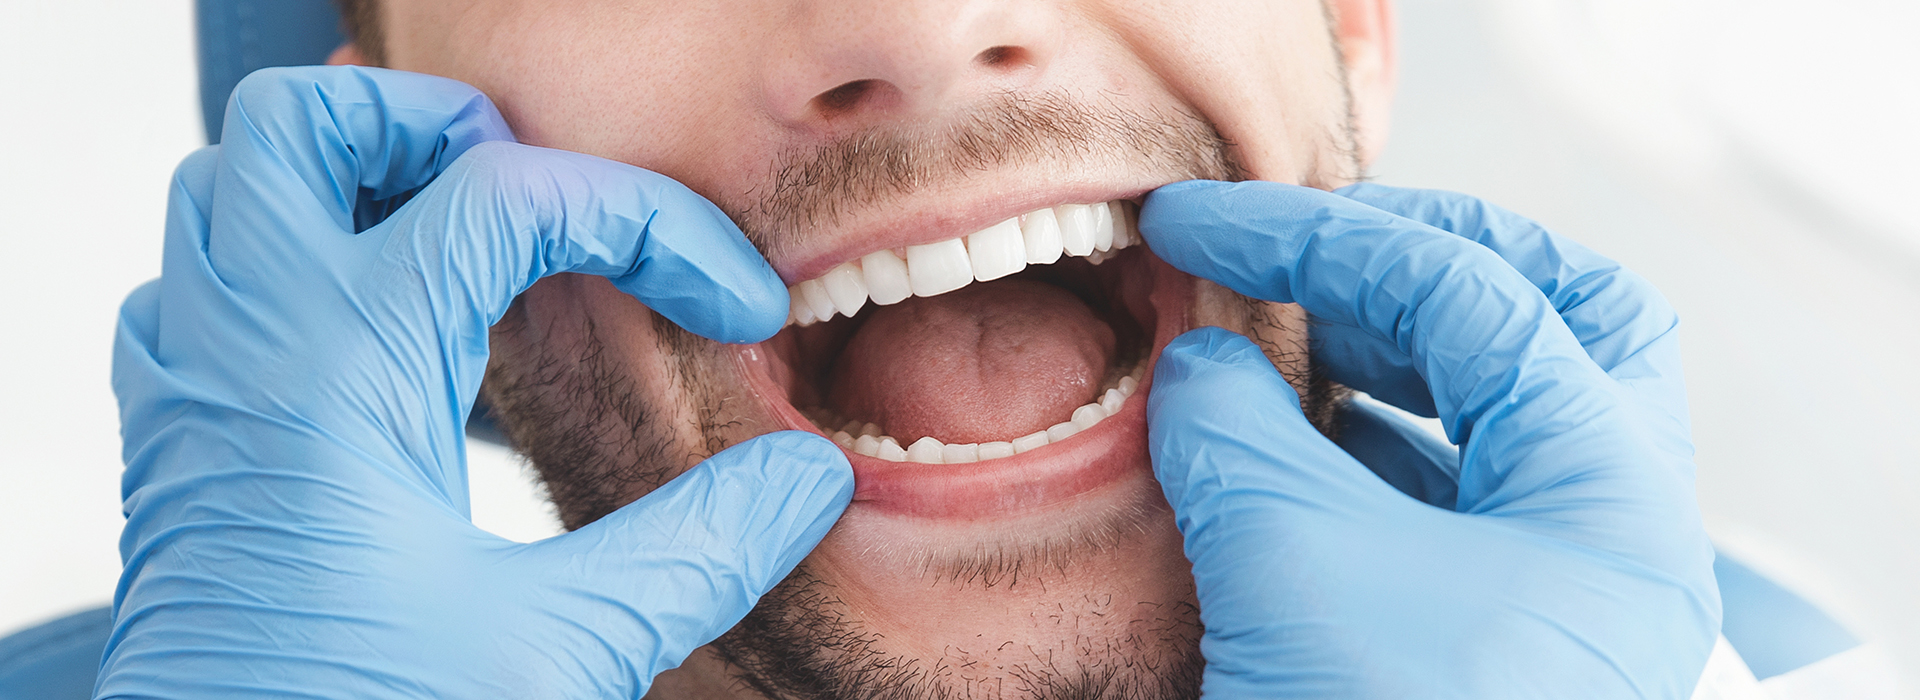 iSmile Dental | Implant Dentistry, Botox reg  and TMJ Disorders